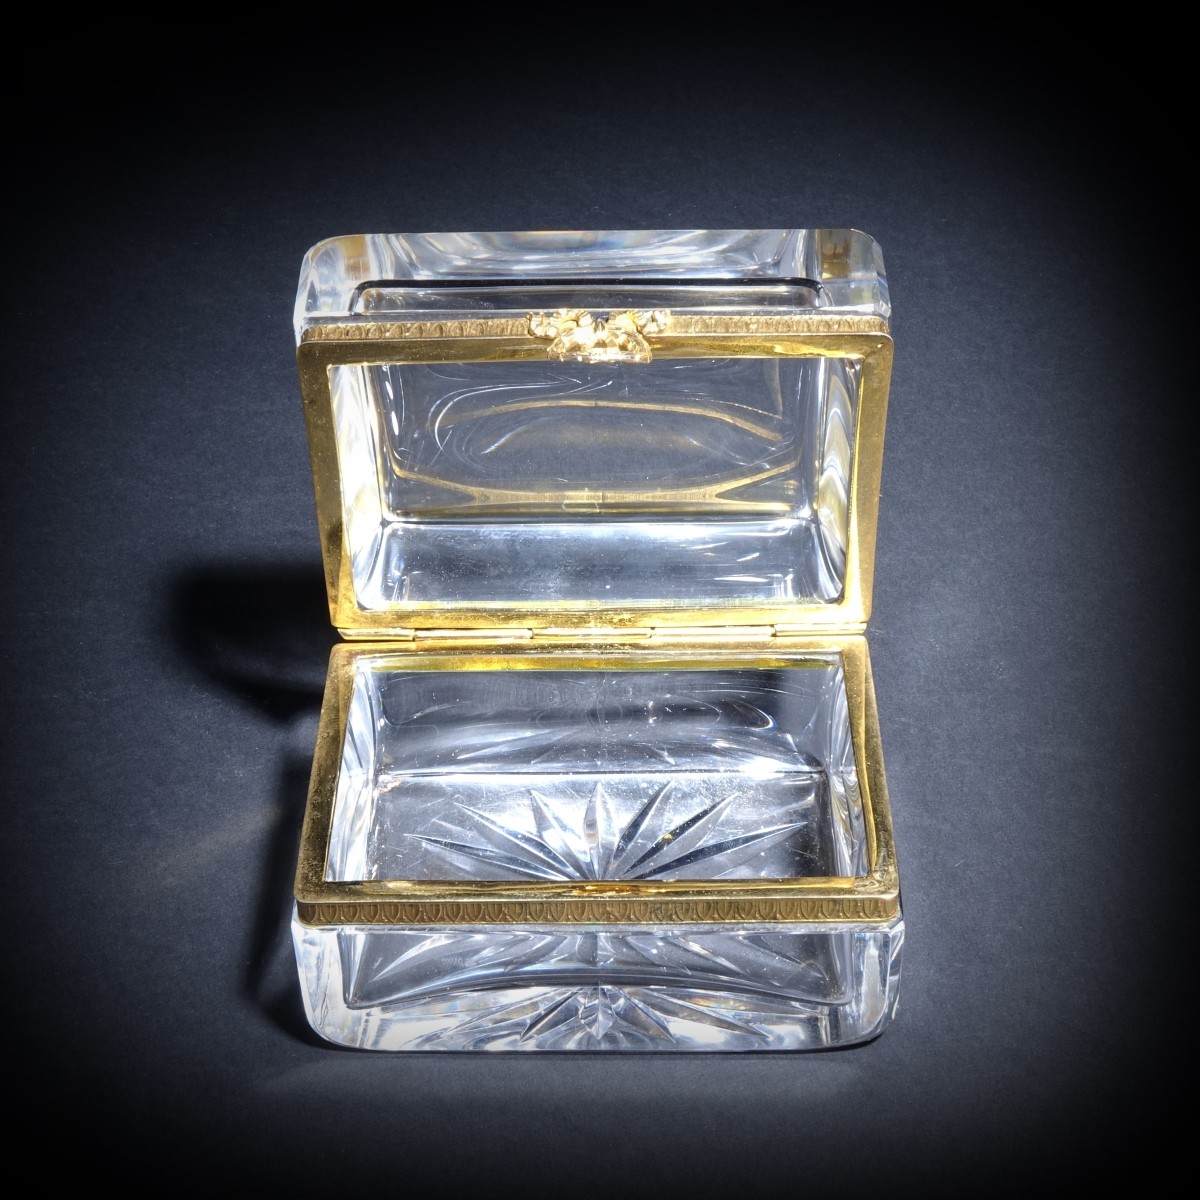 Baccarat Crystal Casket Box